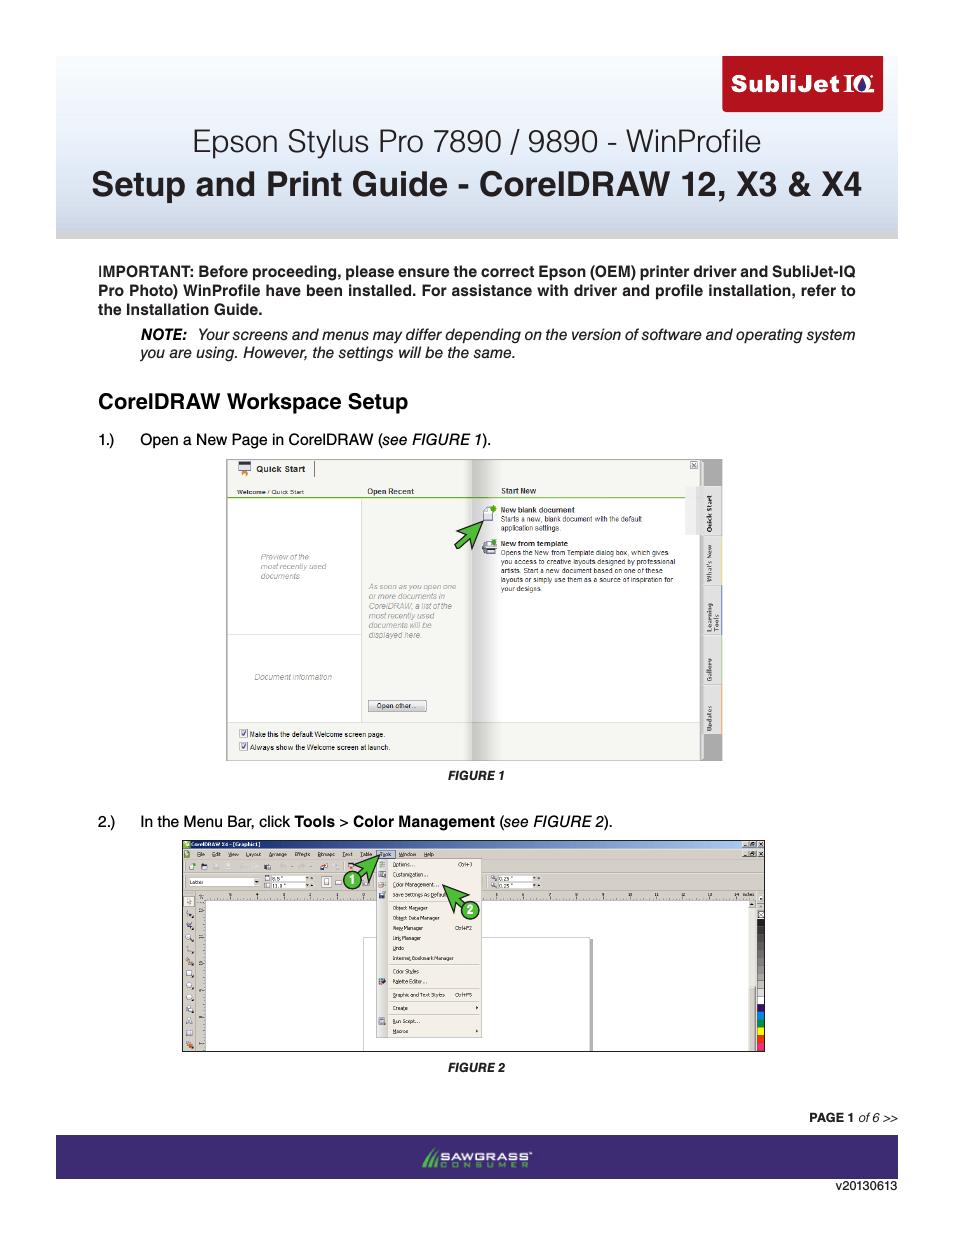 SubliJet IQ Epson Stylus Pro 9890 - IQ Pro Photo (Windows ICC Profile Setup): Print & Setup Guide CorelDRAW 12 - X4